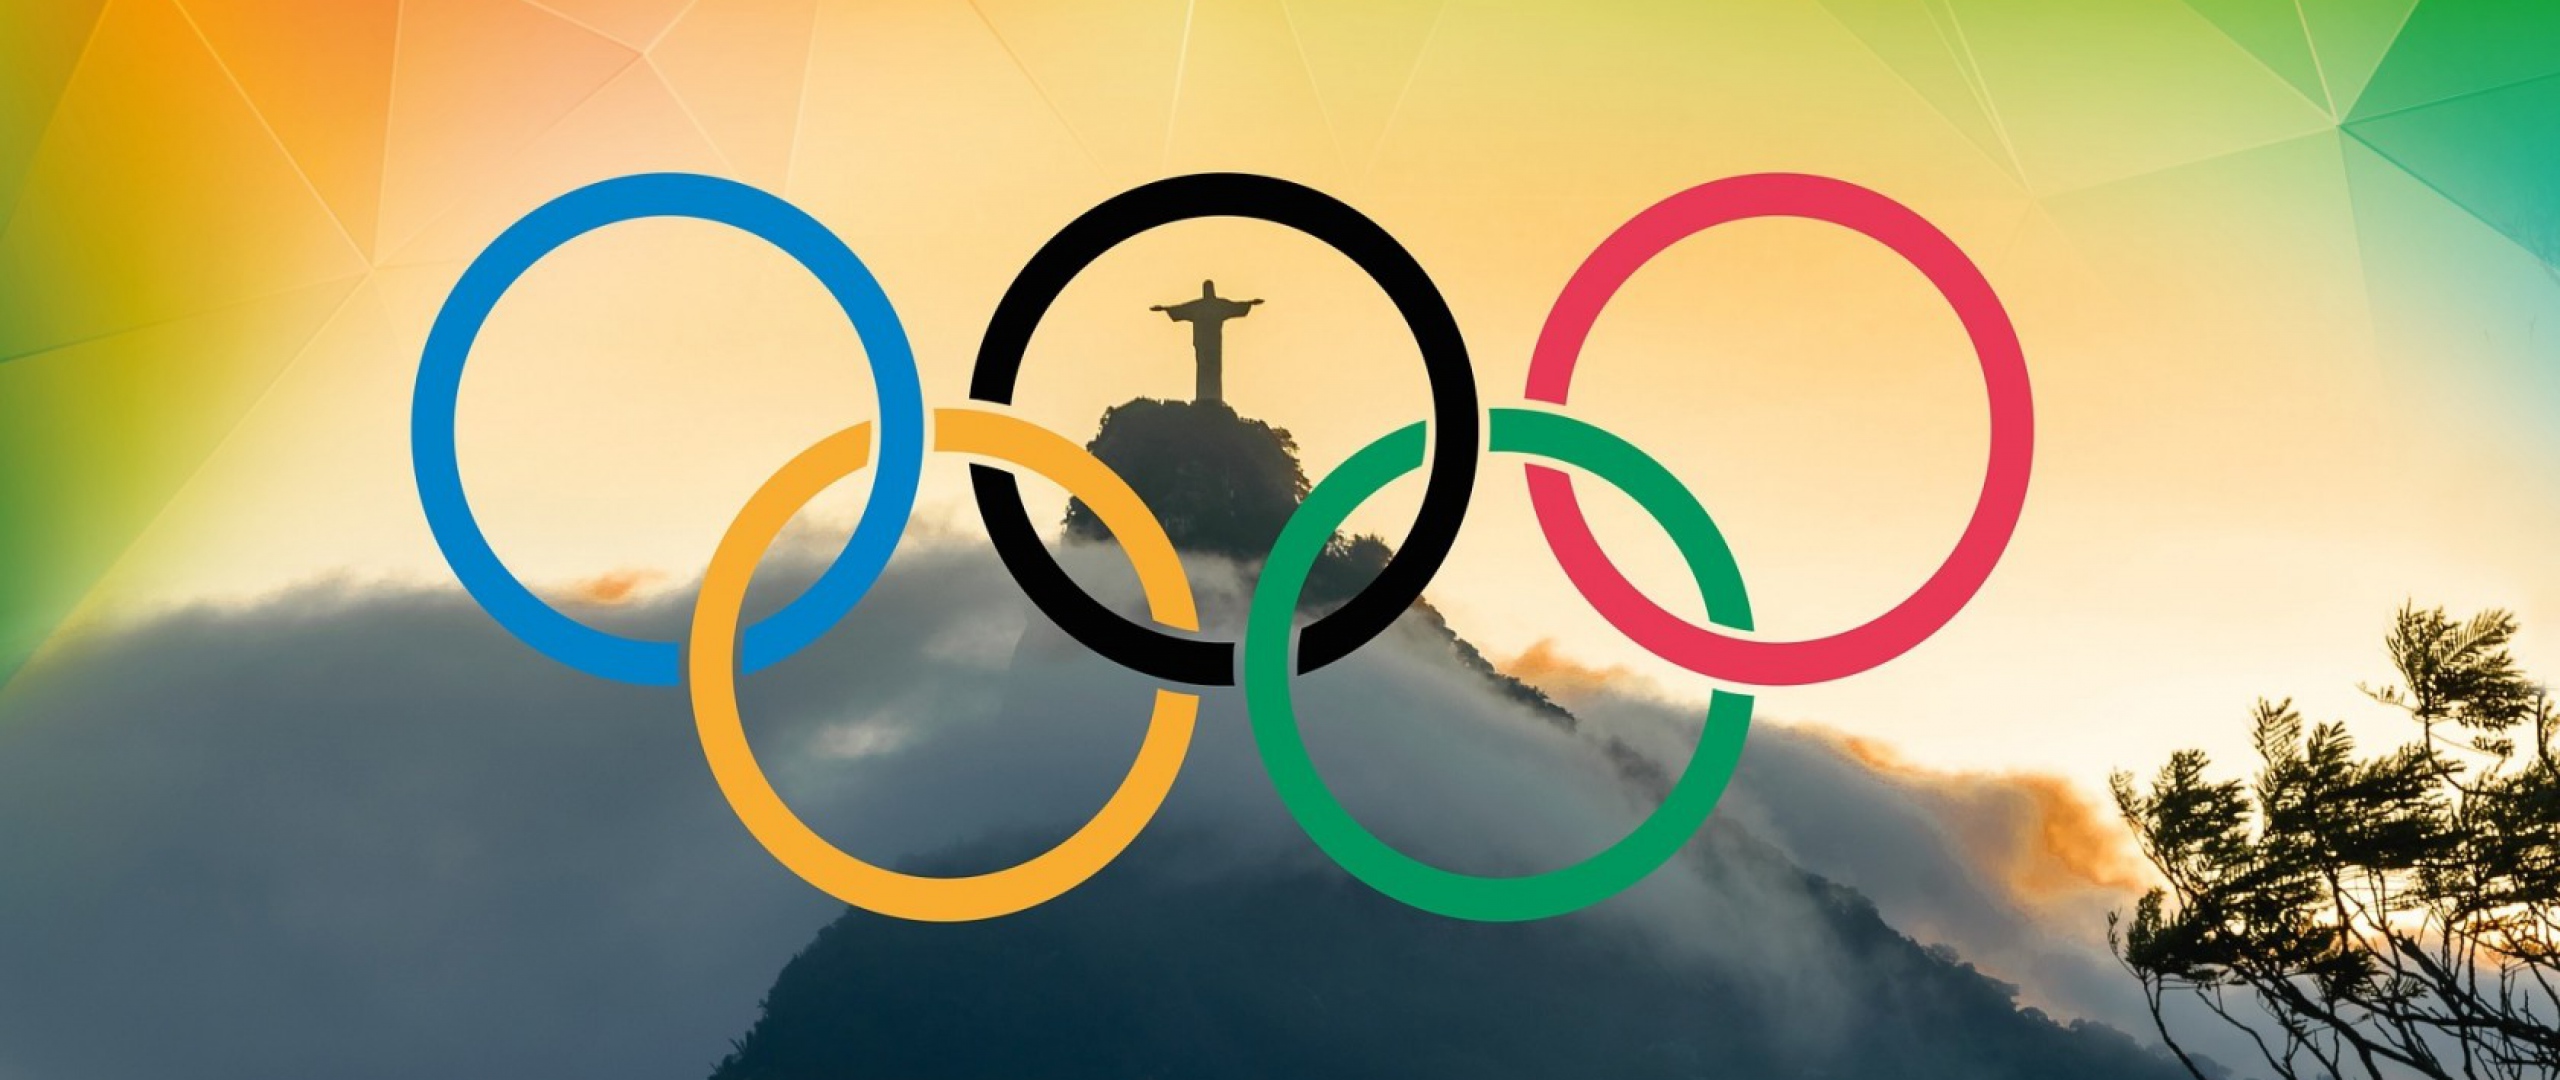 Download Wallpaper 2560x1080 Olympic games rio 2016, Rio de.